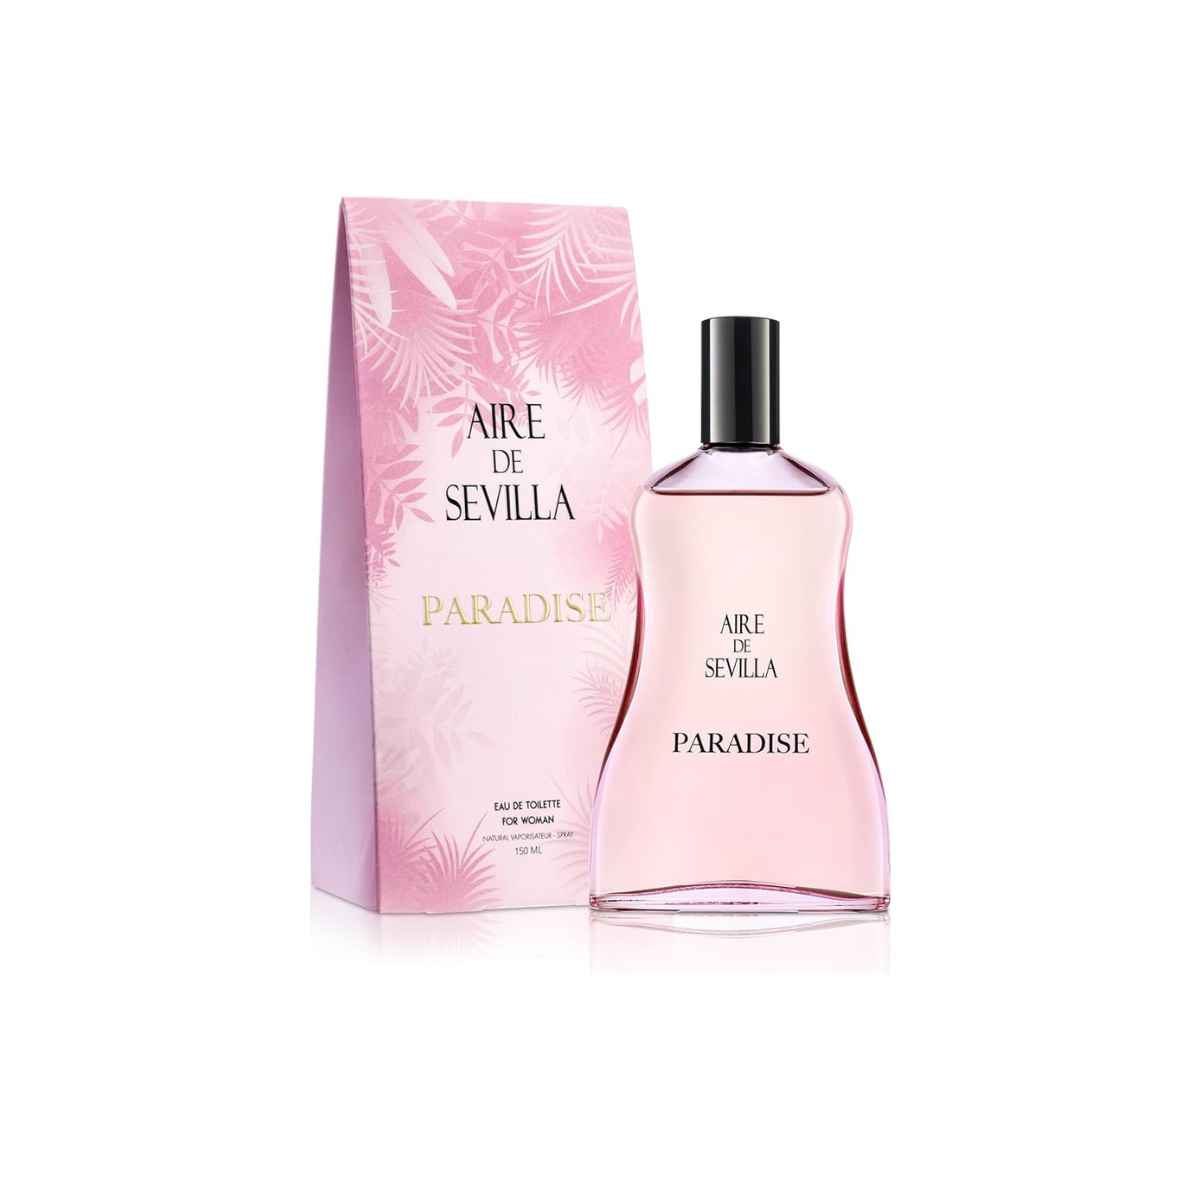 Perfume Aire de Sevilla Paradise 150 ml